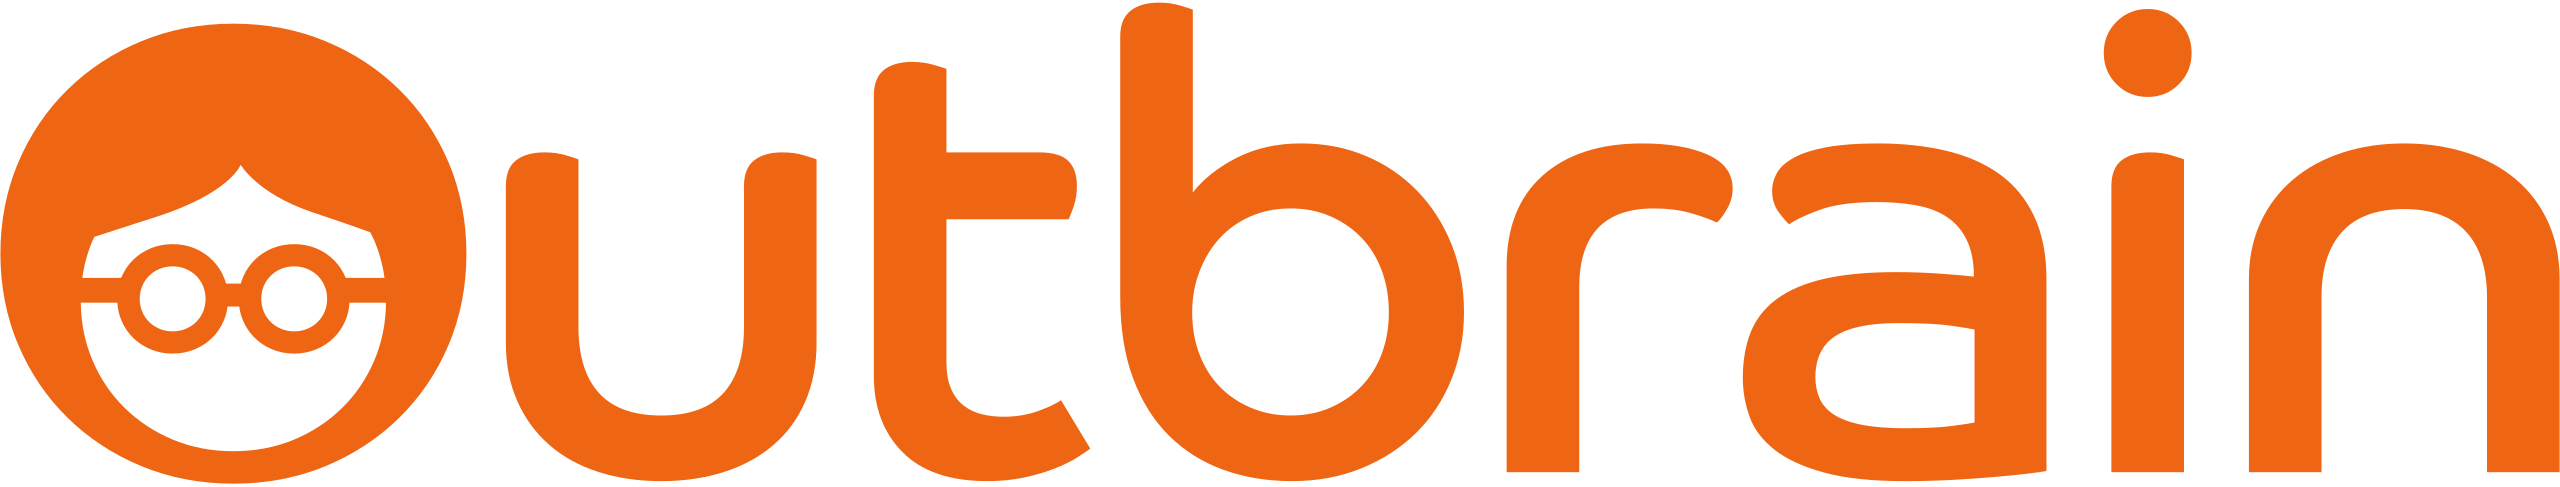 Outbrain logo